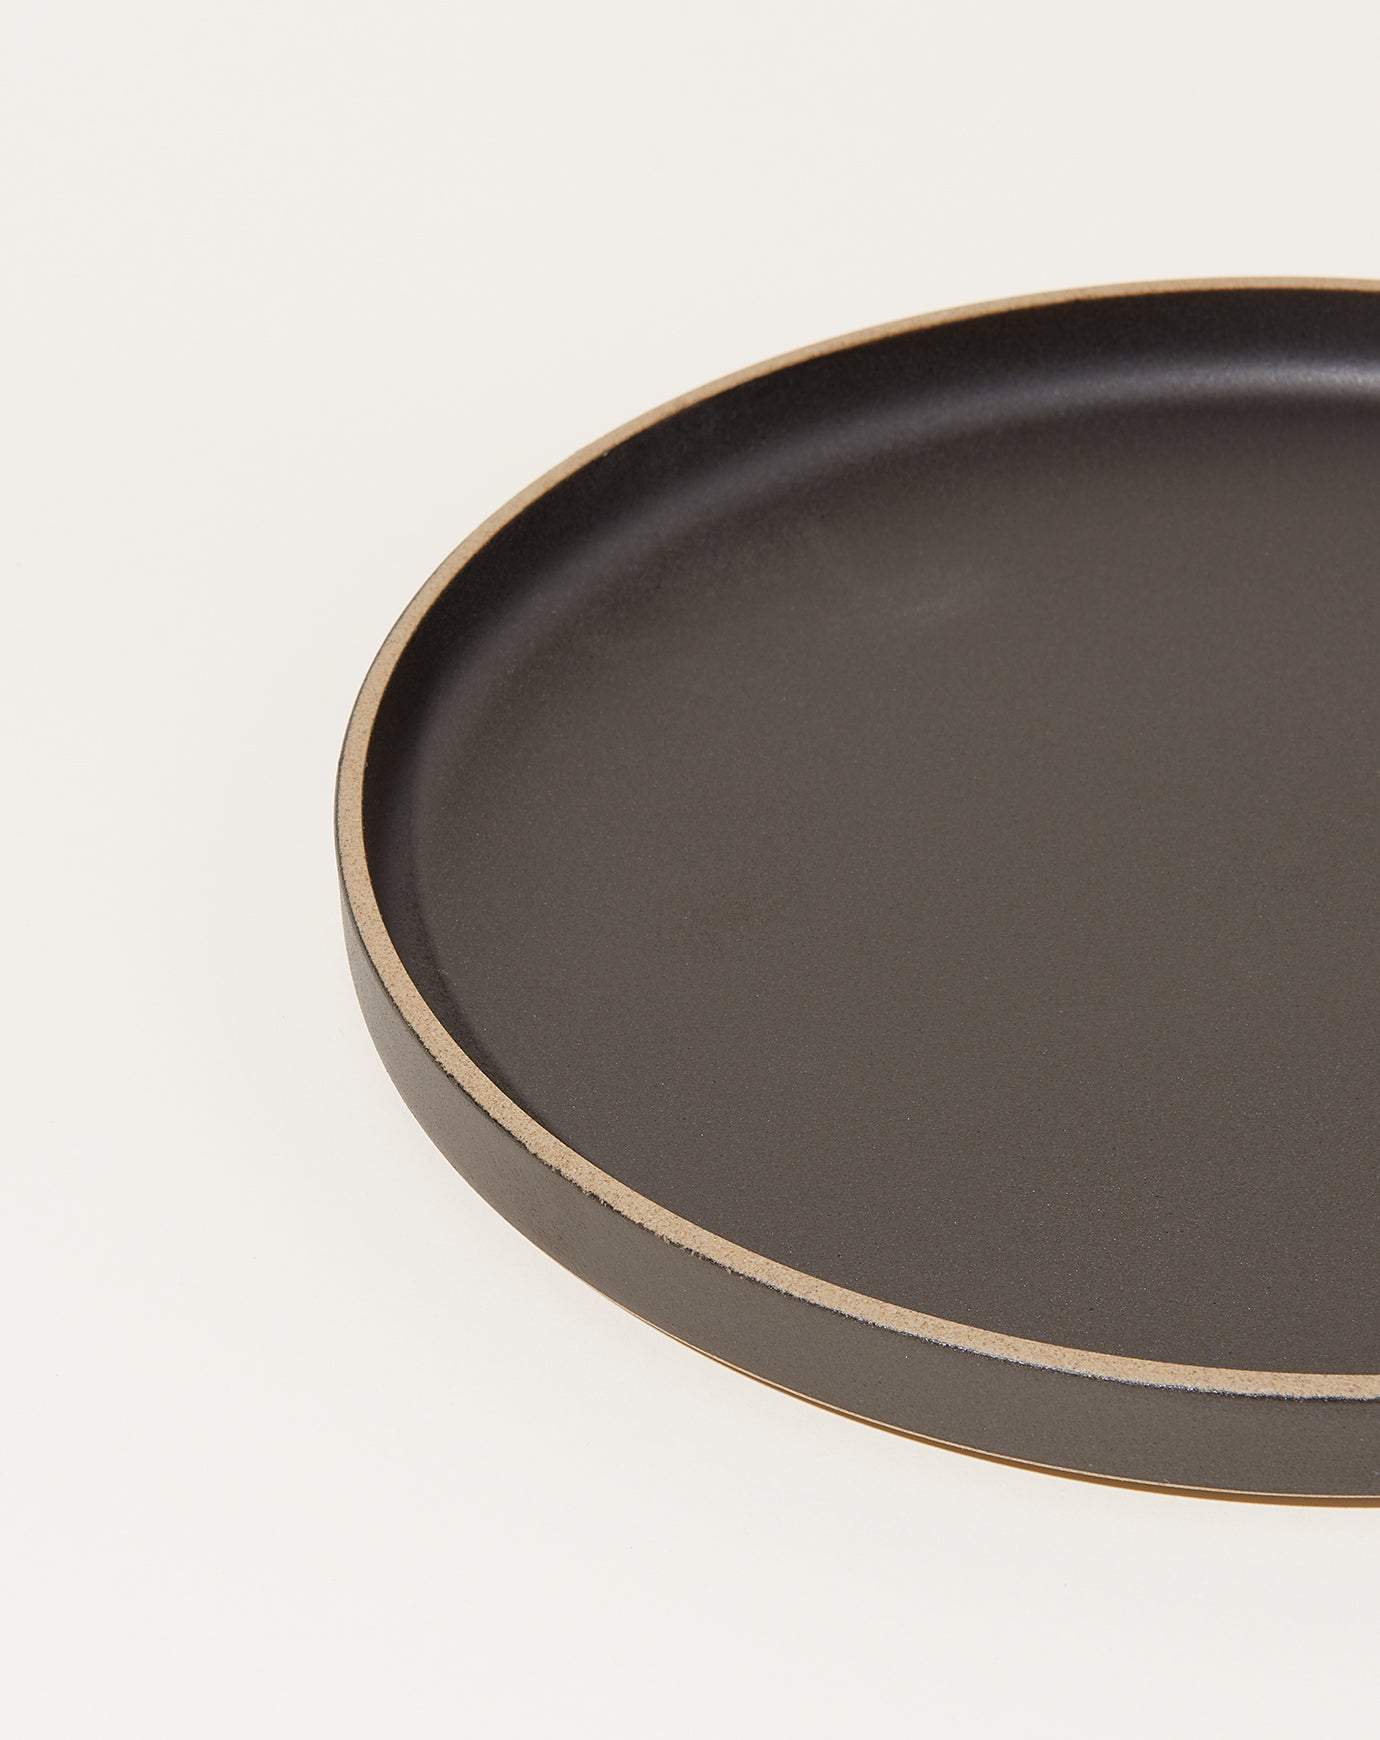 Hasami Porcelain 10" Plate in Black